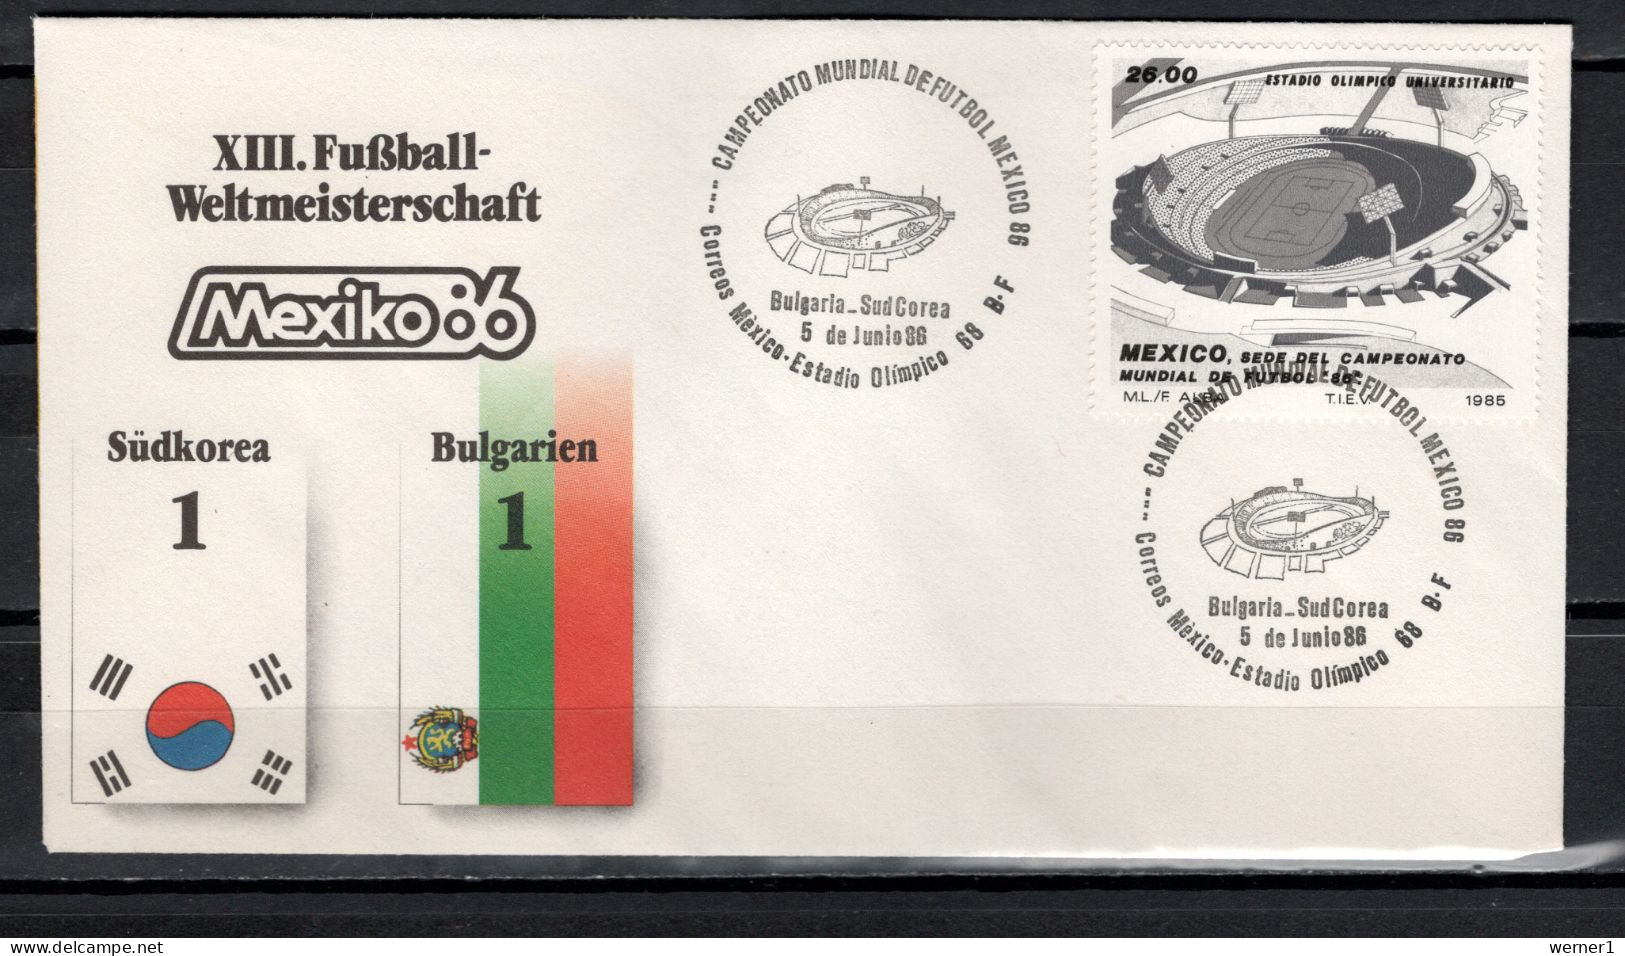 Mexico 1986 Football Soccer World Cup Commemorative Cover Match South Korea - Bulgaria  1 : 1 - 1986 – Mexico